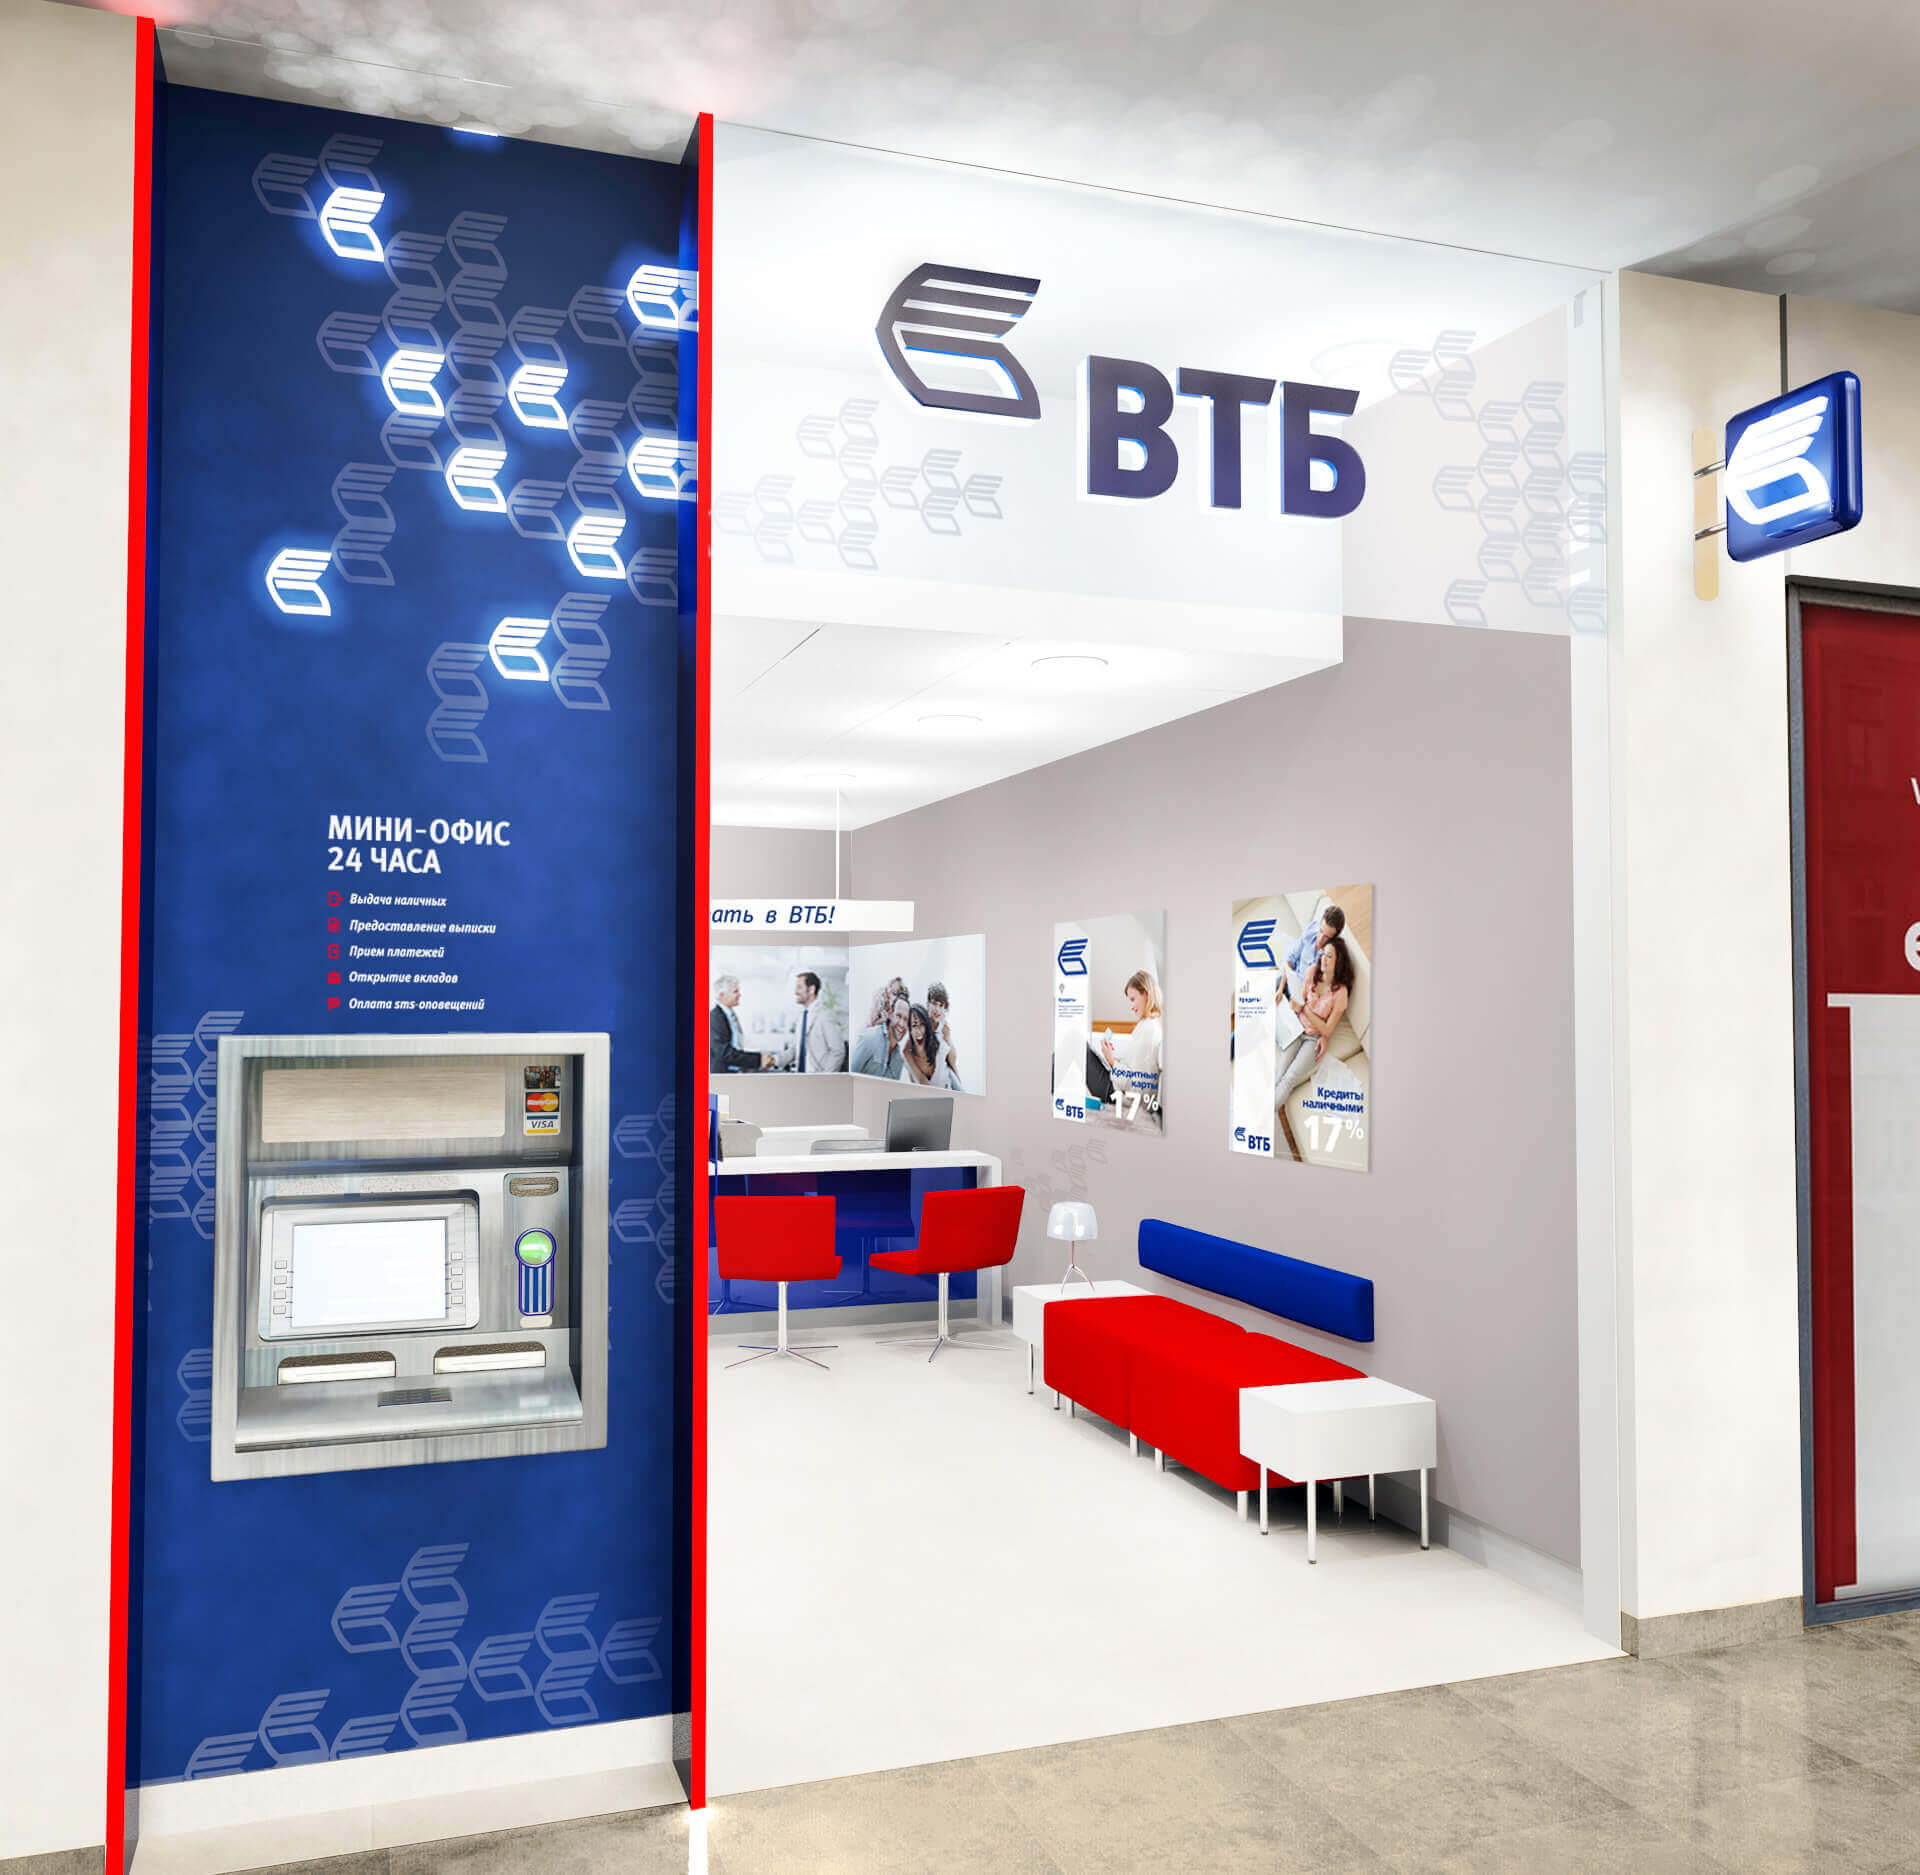 VTB Bank ATM rebrand, entrance to express banking lobby, interior design